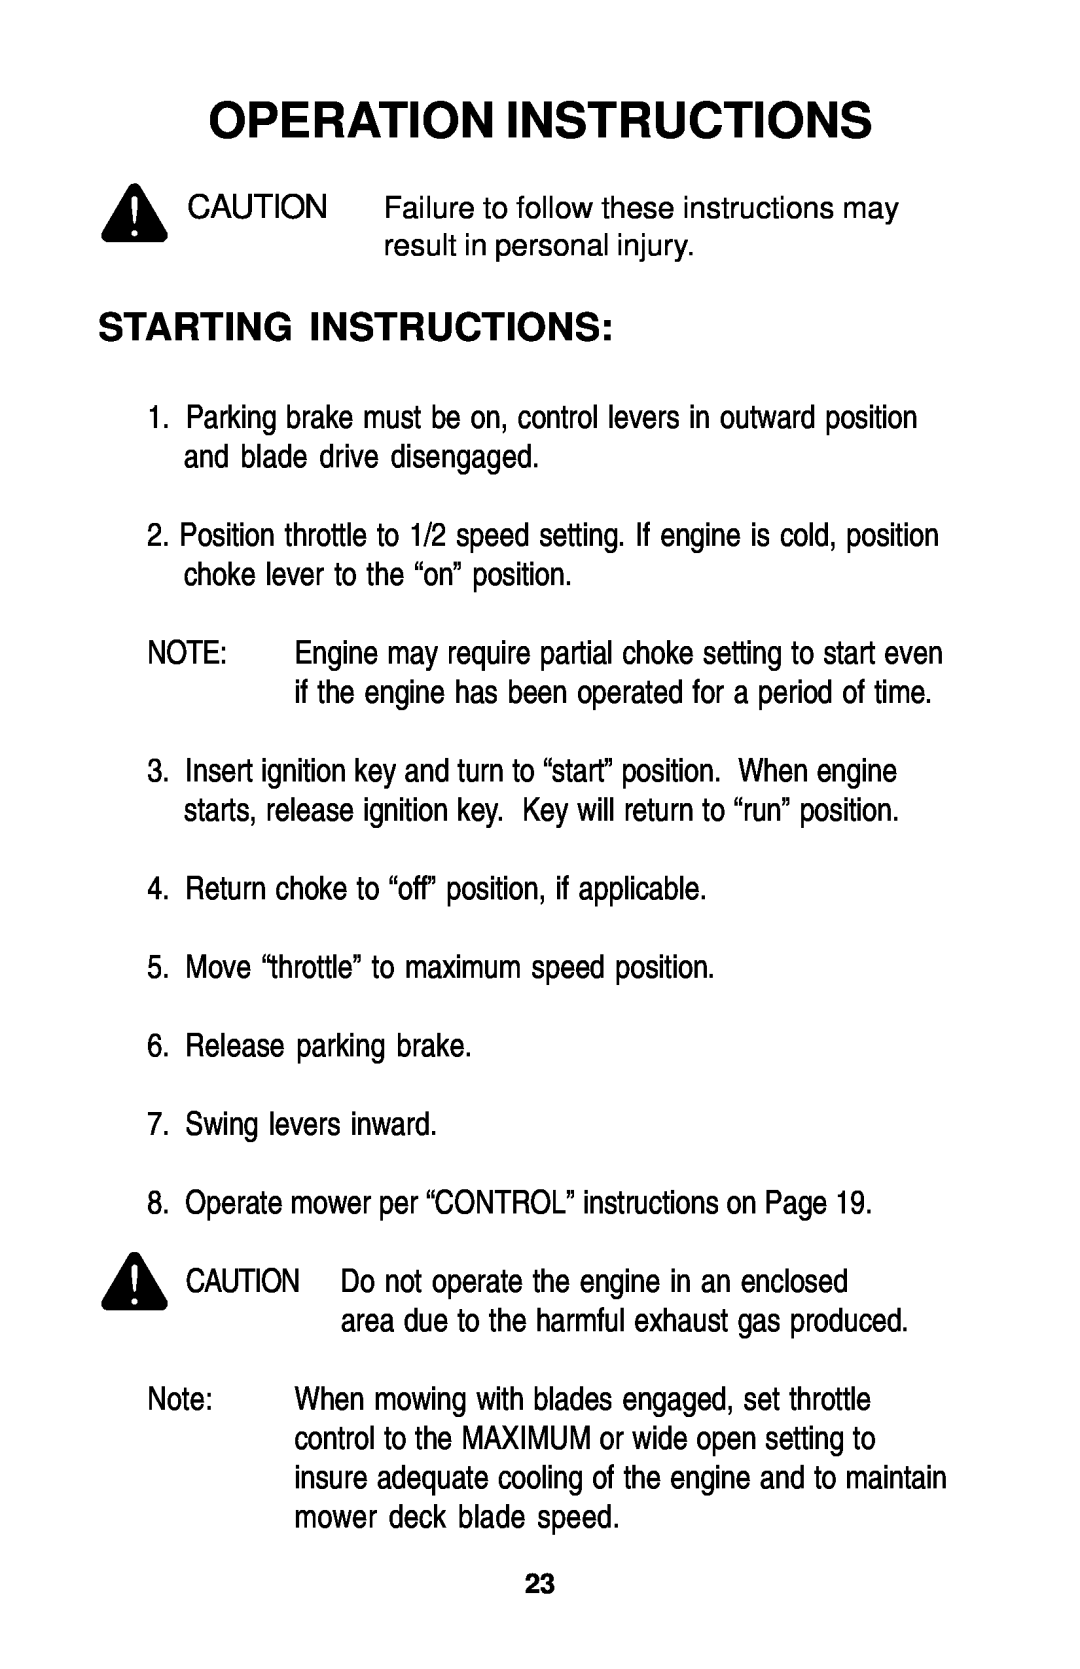 Dixon 18134-1004 manual Starting Instructions, Operation Instructions 